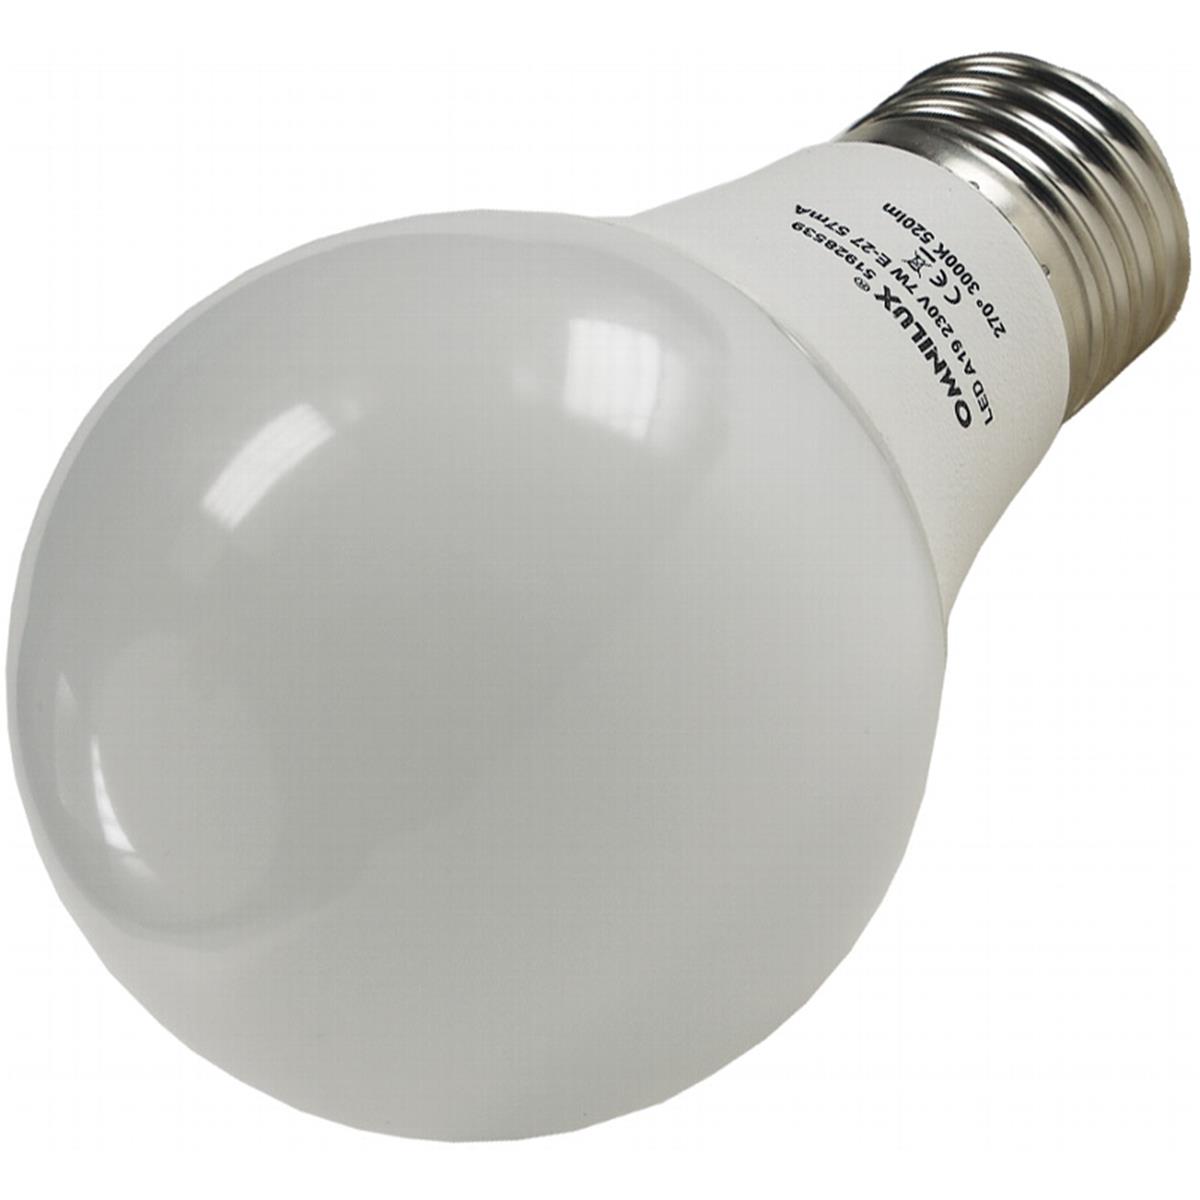 LED Glühlampe OMNILUX E27 3000k, 520lm, 230V / 7W, warmweiß